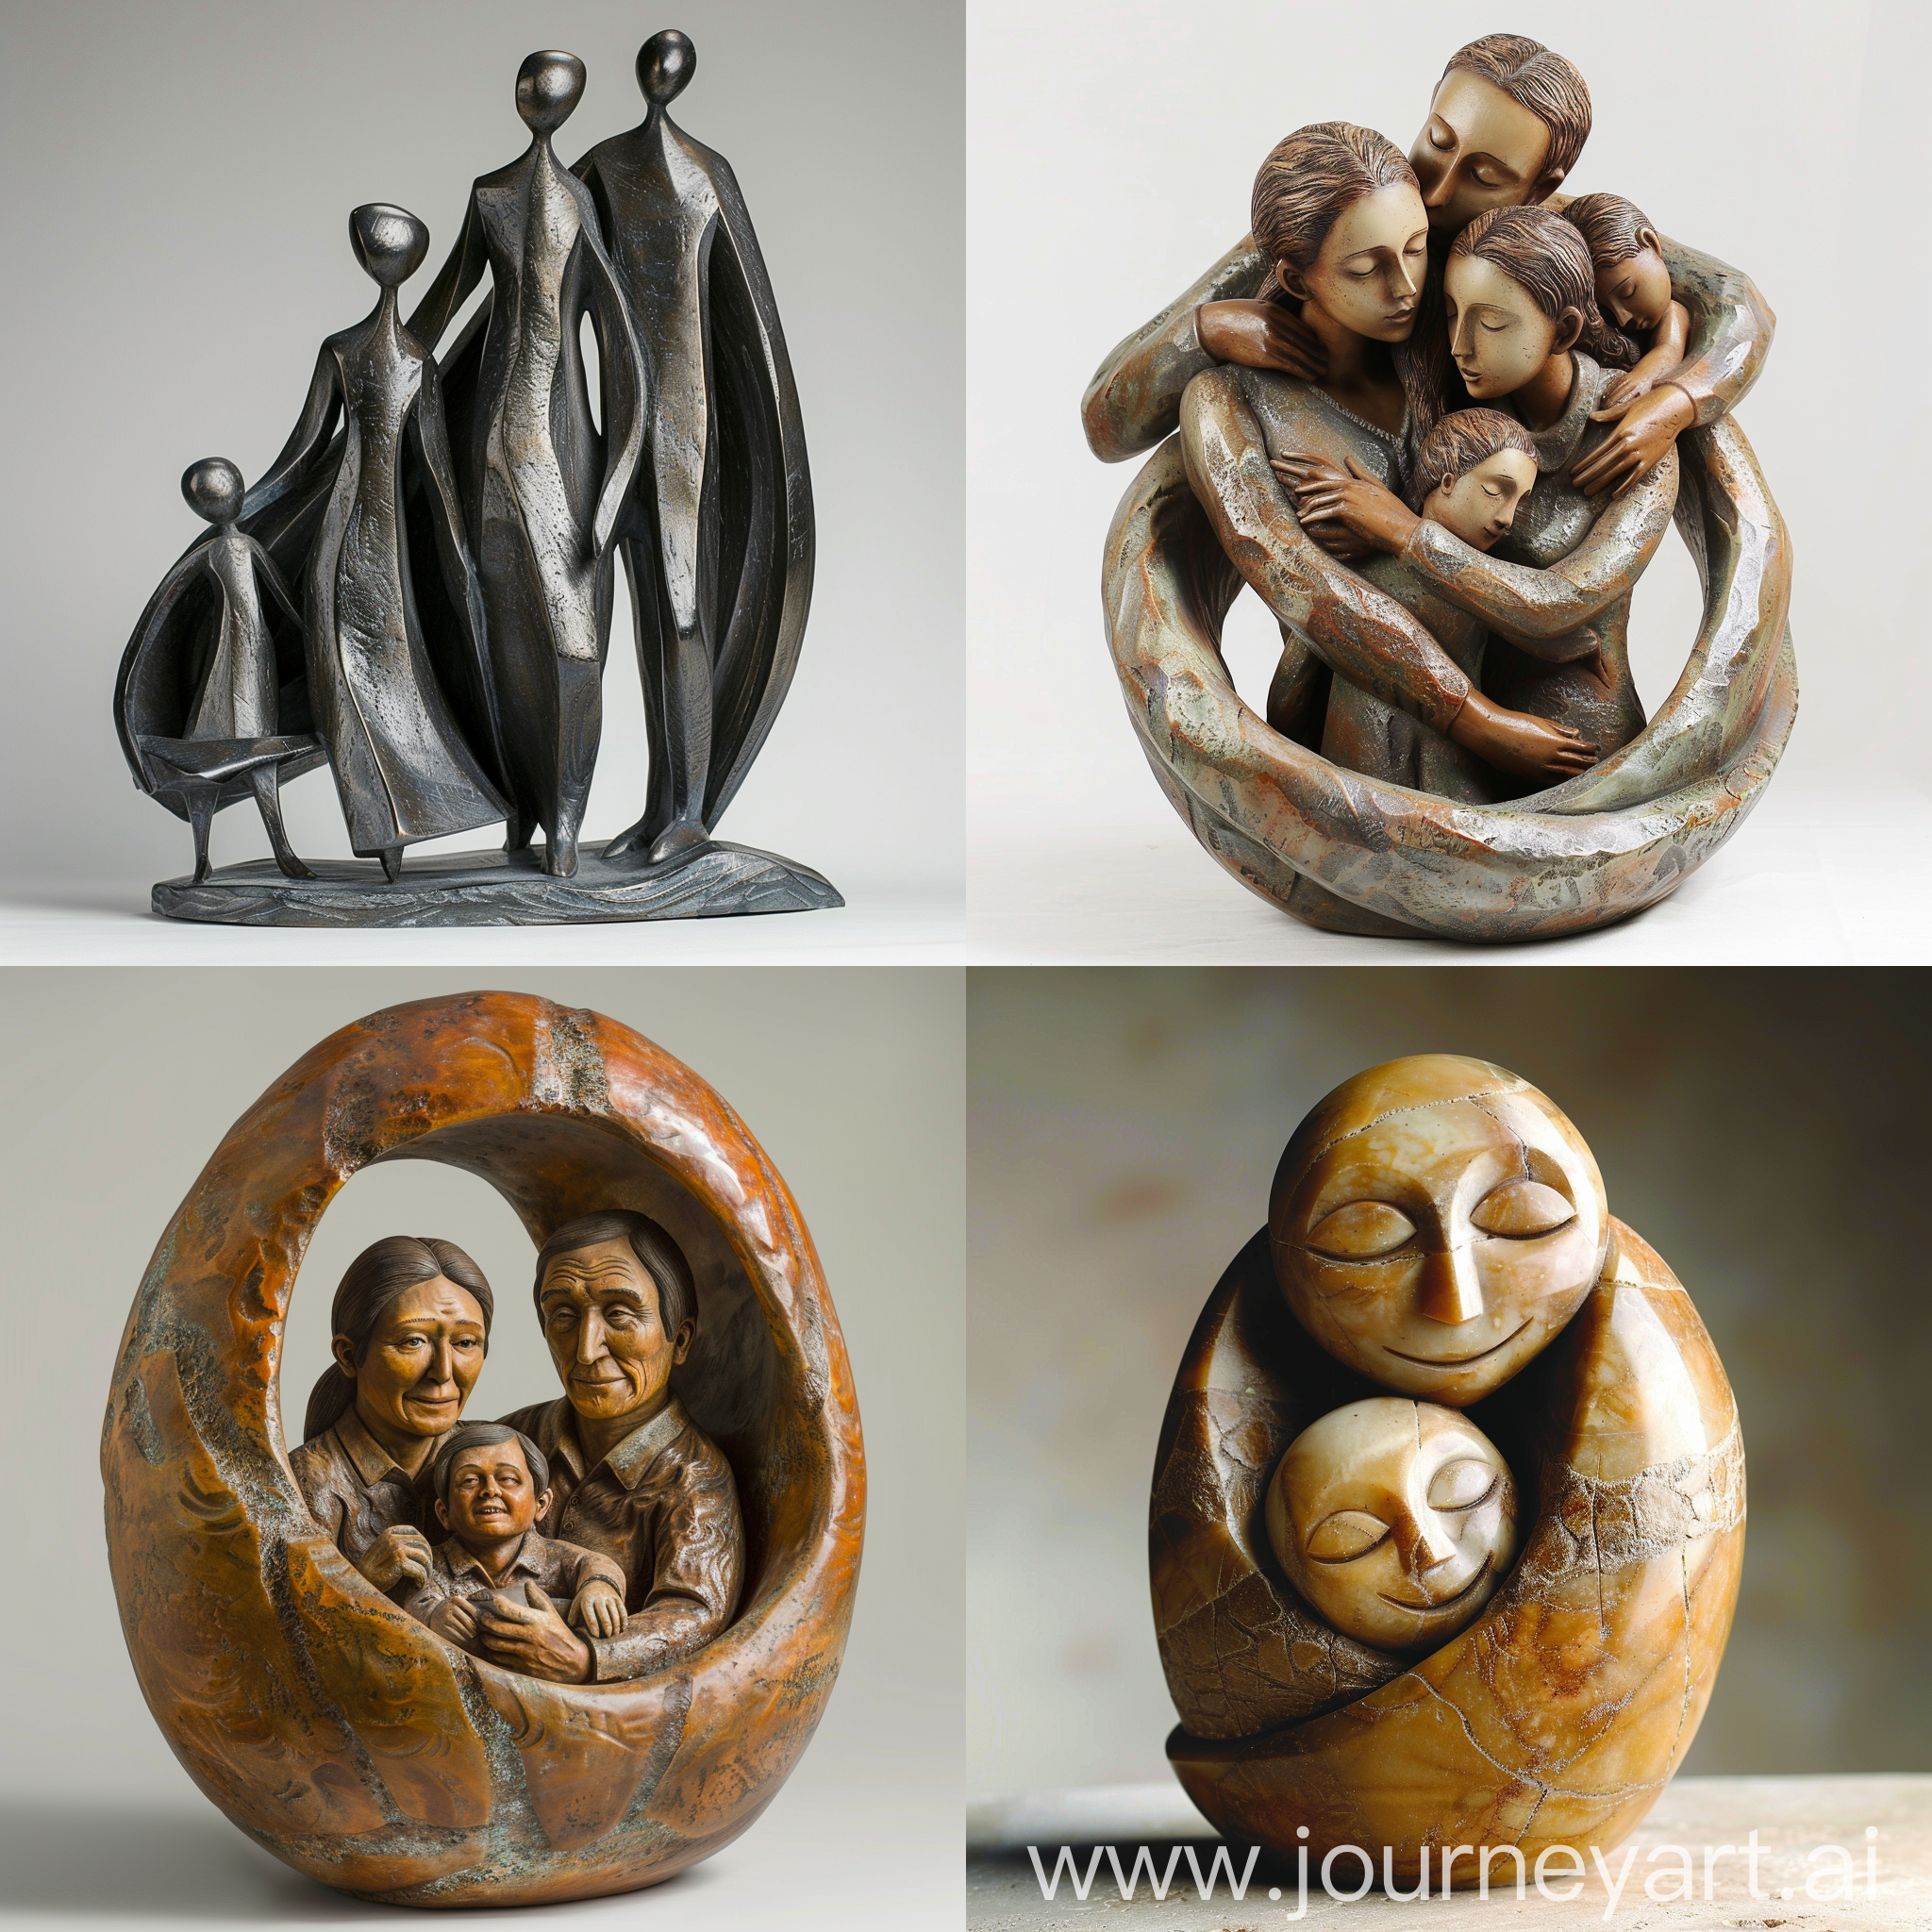 Escultura que promueve familia y convivencia